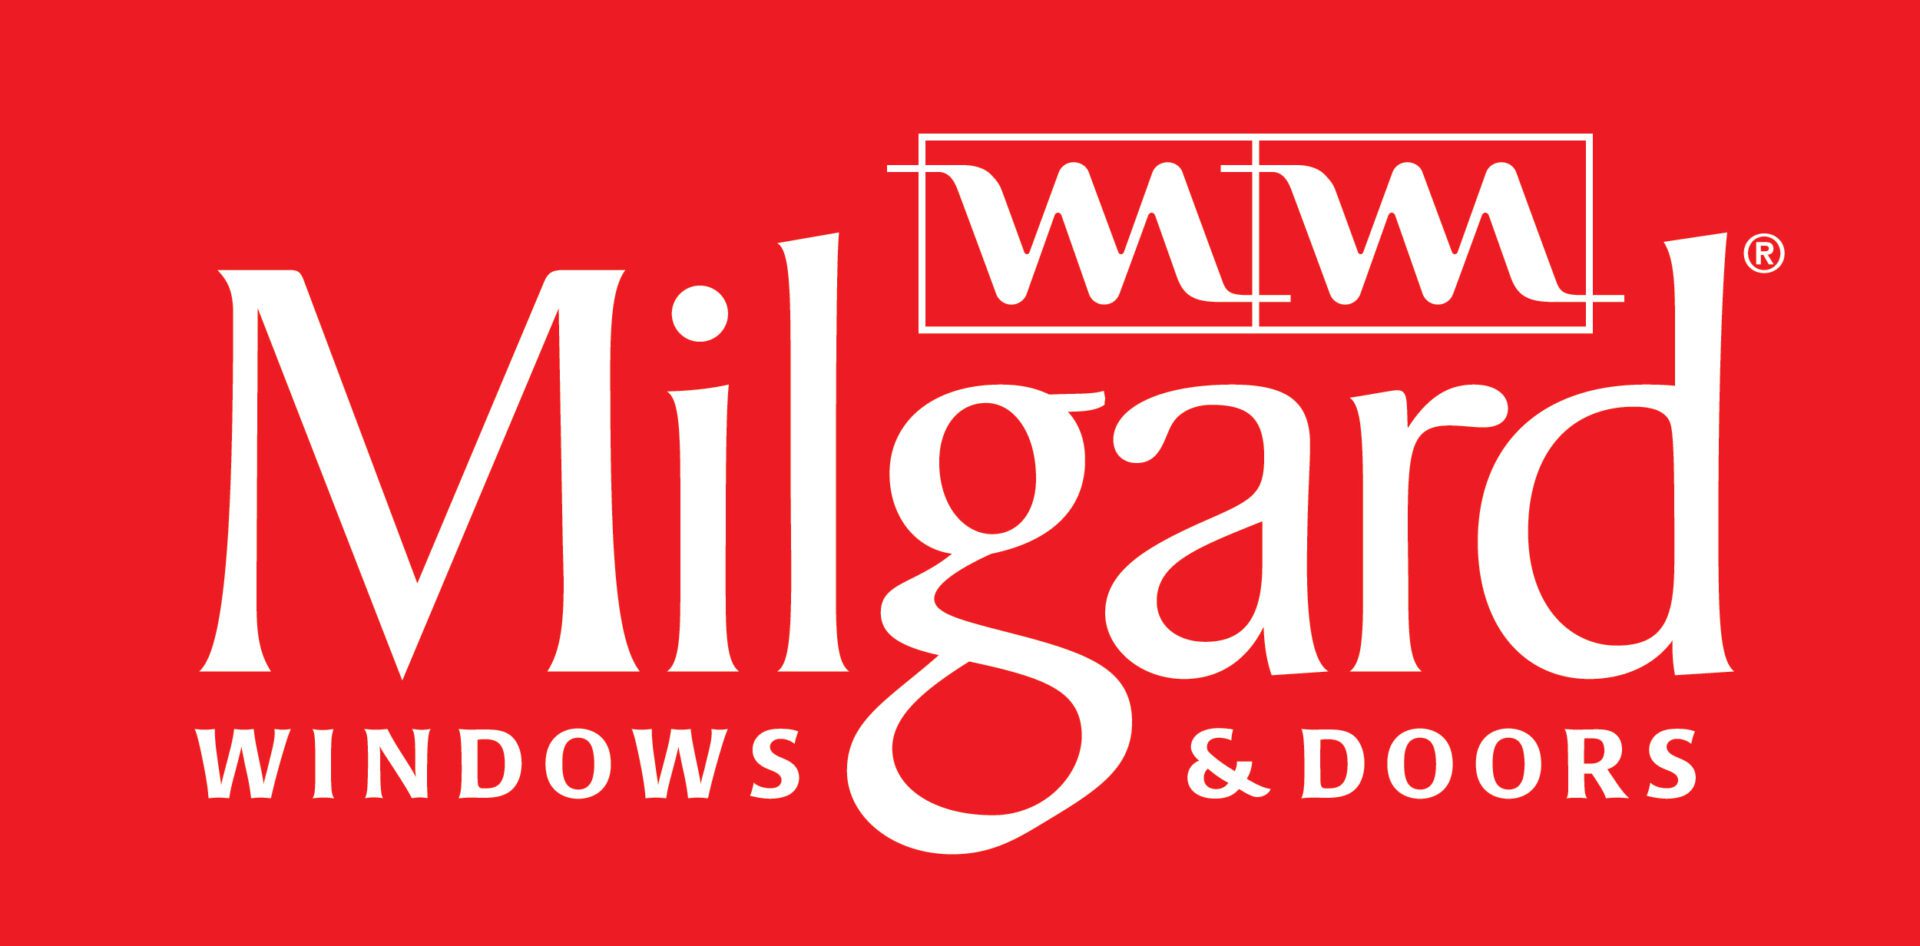 Milgard windows & doors logo.